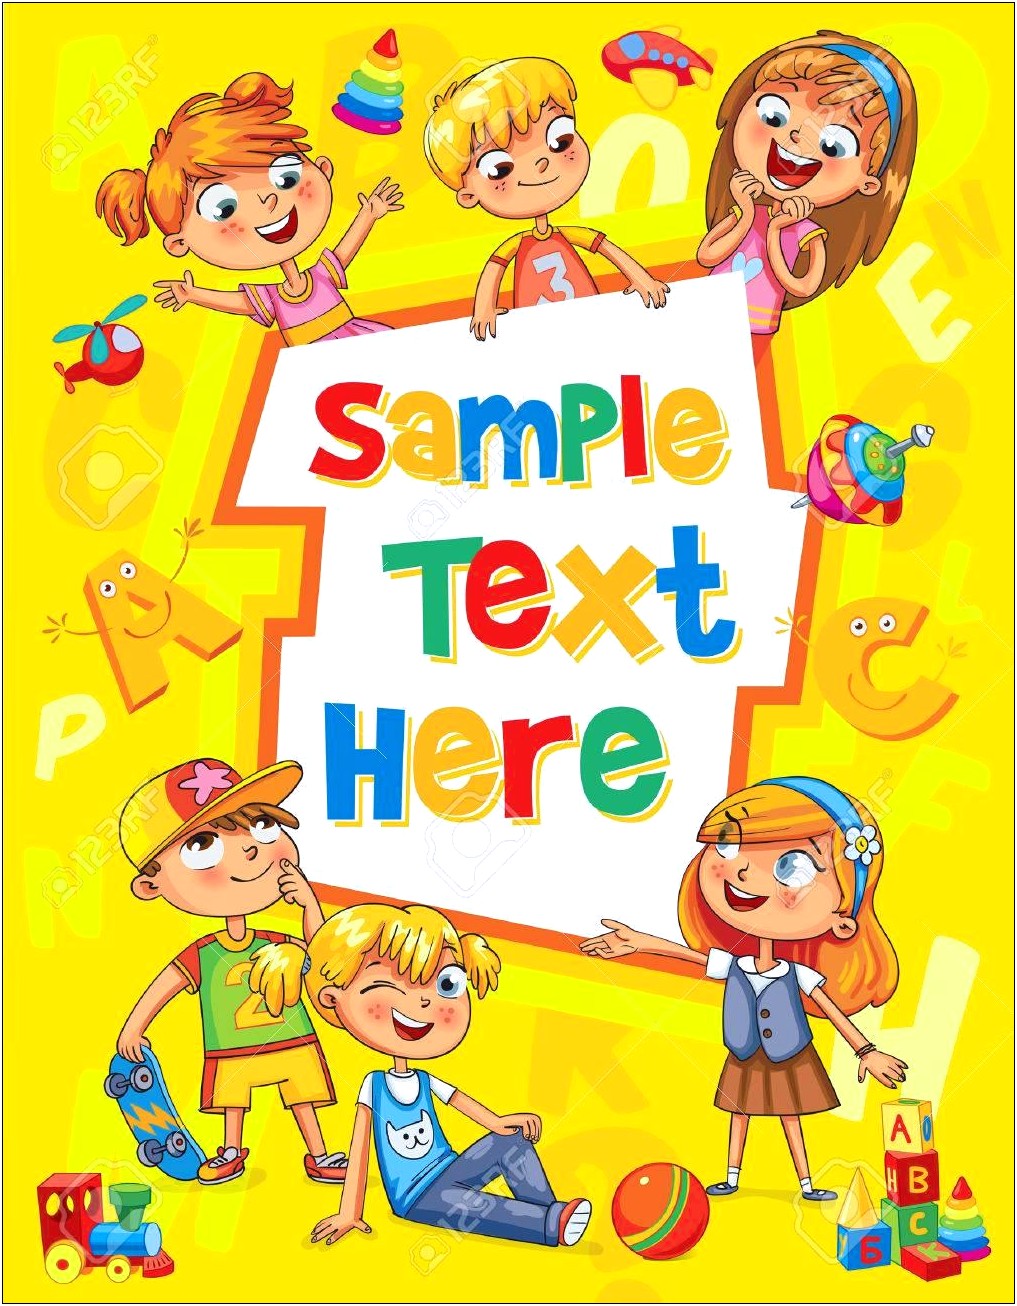 Children's Book Cover Template Free